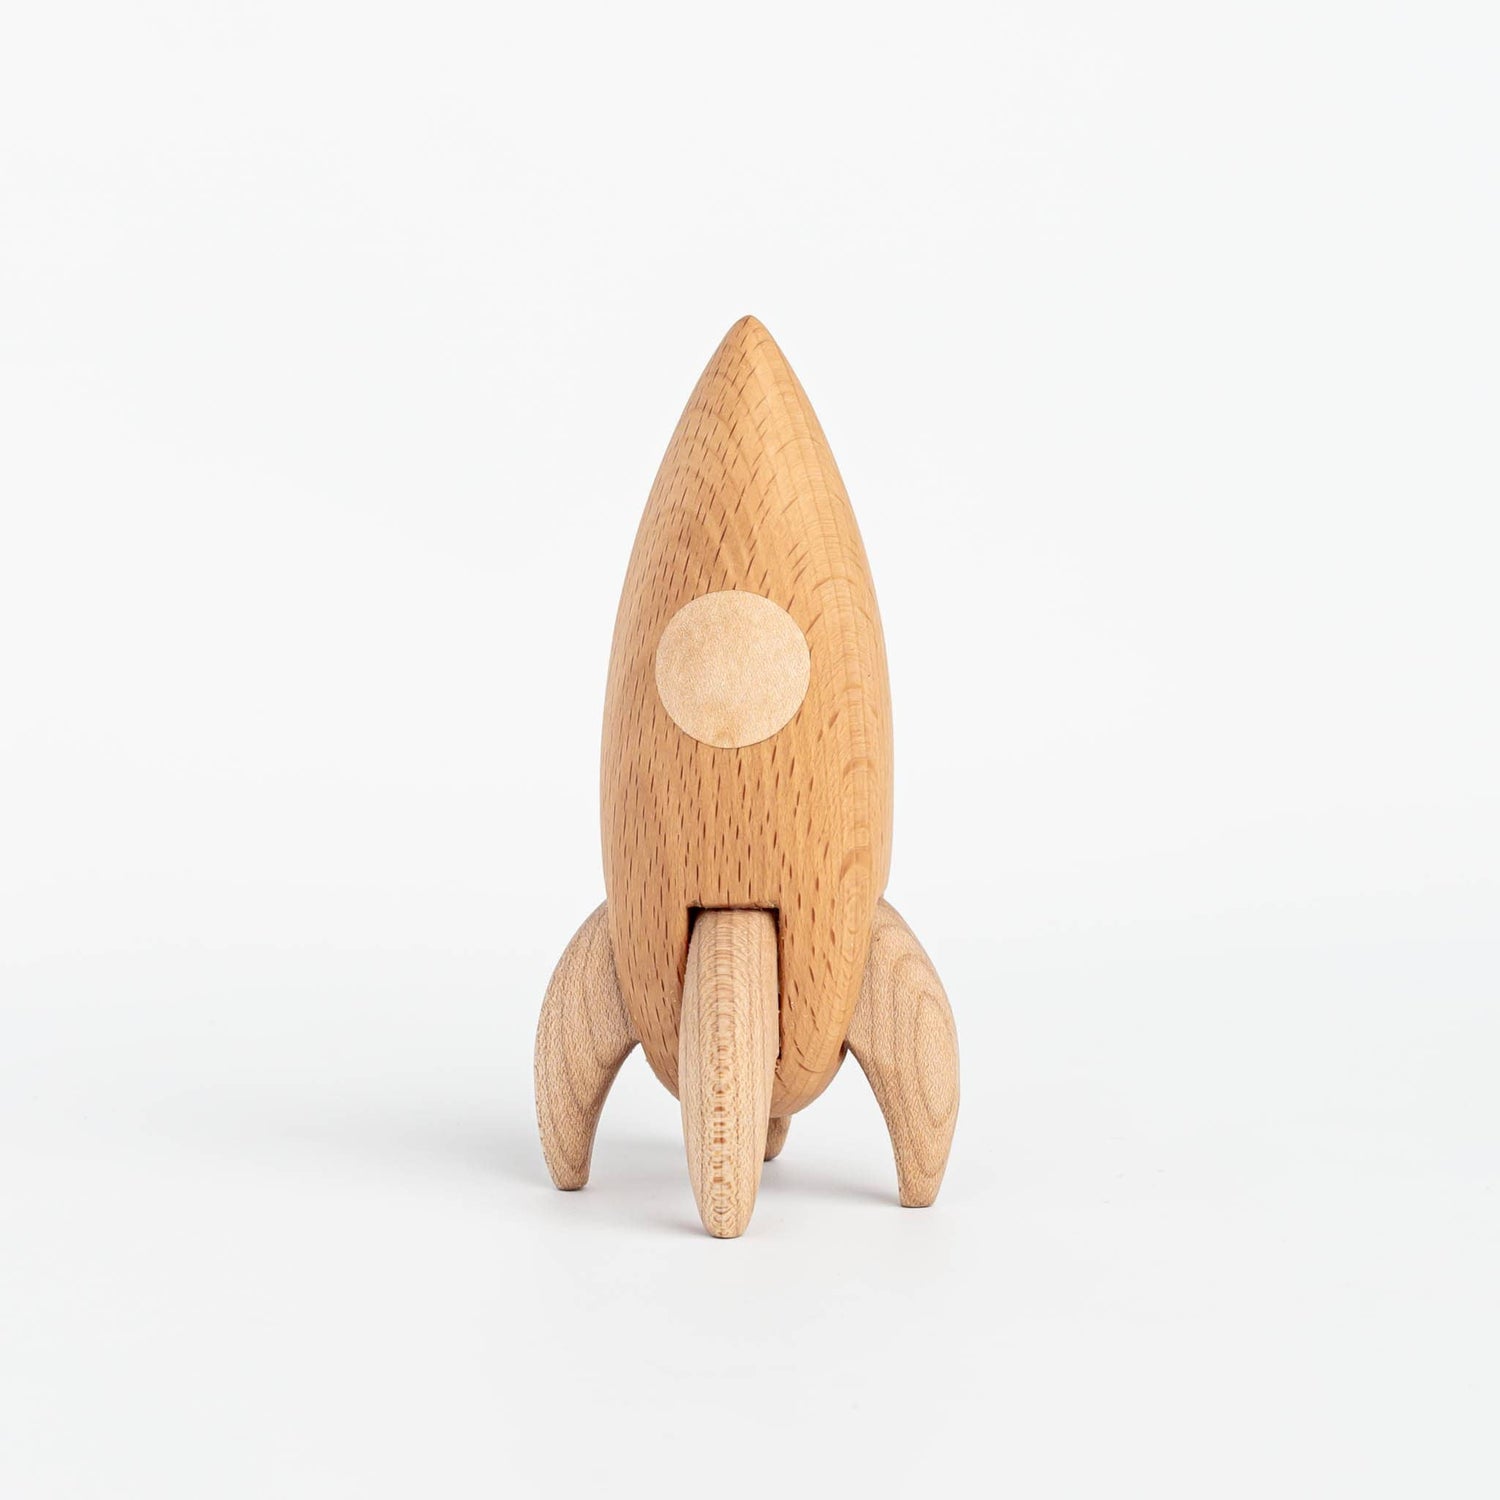 Handmade Wooden Toy Rocket